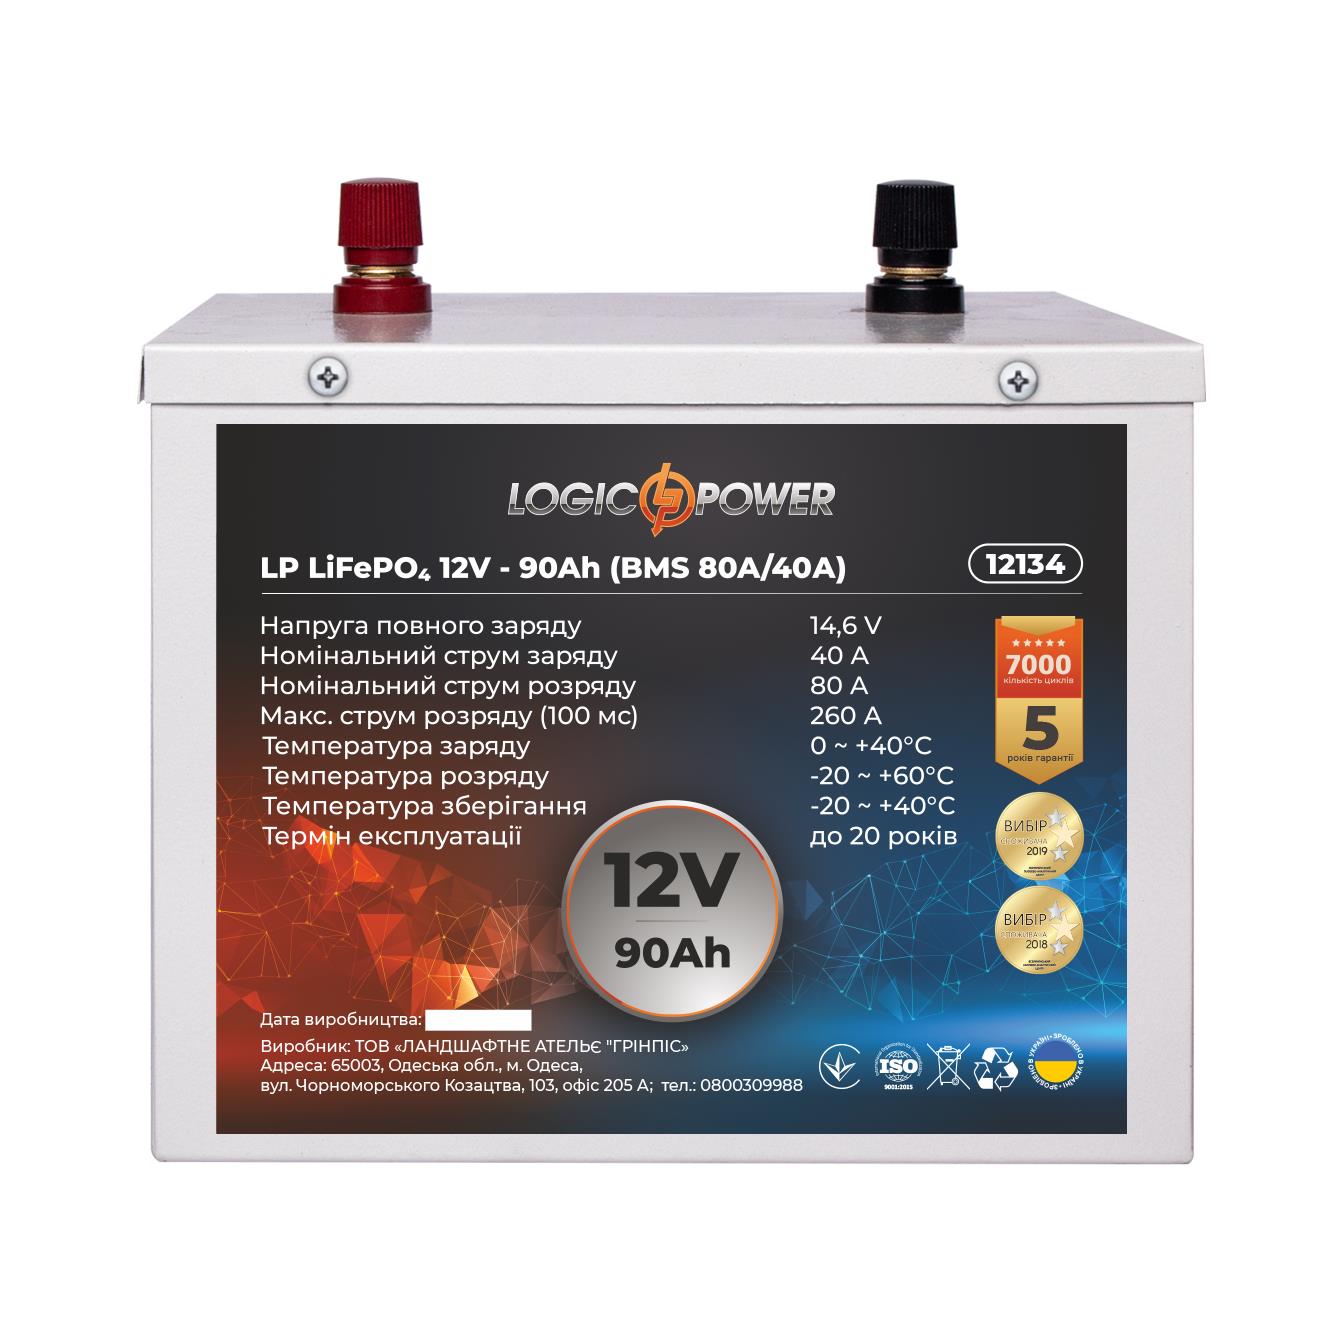 Аккумулятор литий-железо-фосфатный LogicPower LP LiFePO4 12V - 90 Ah (BMS 80A/40A) металл (12134)